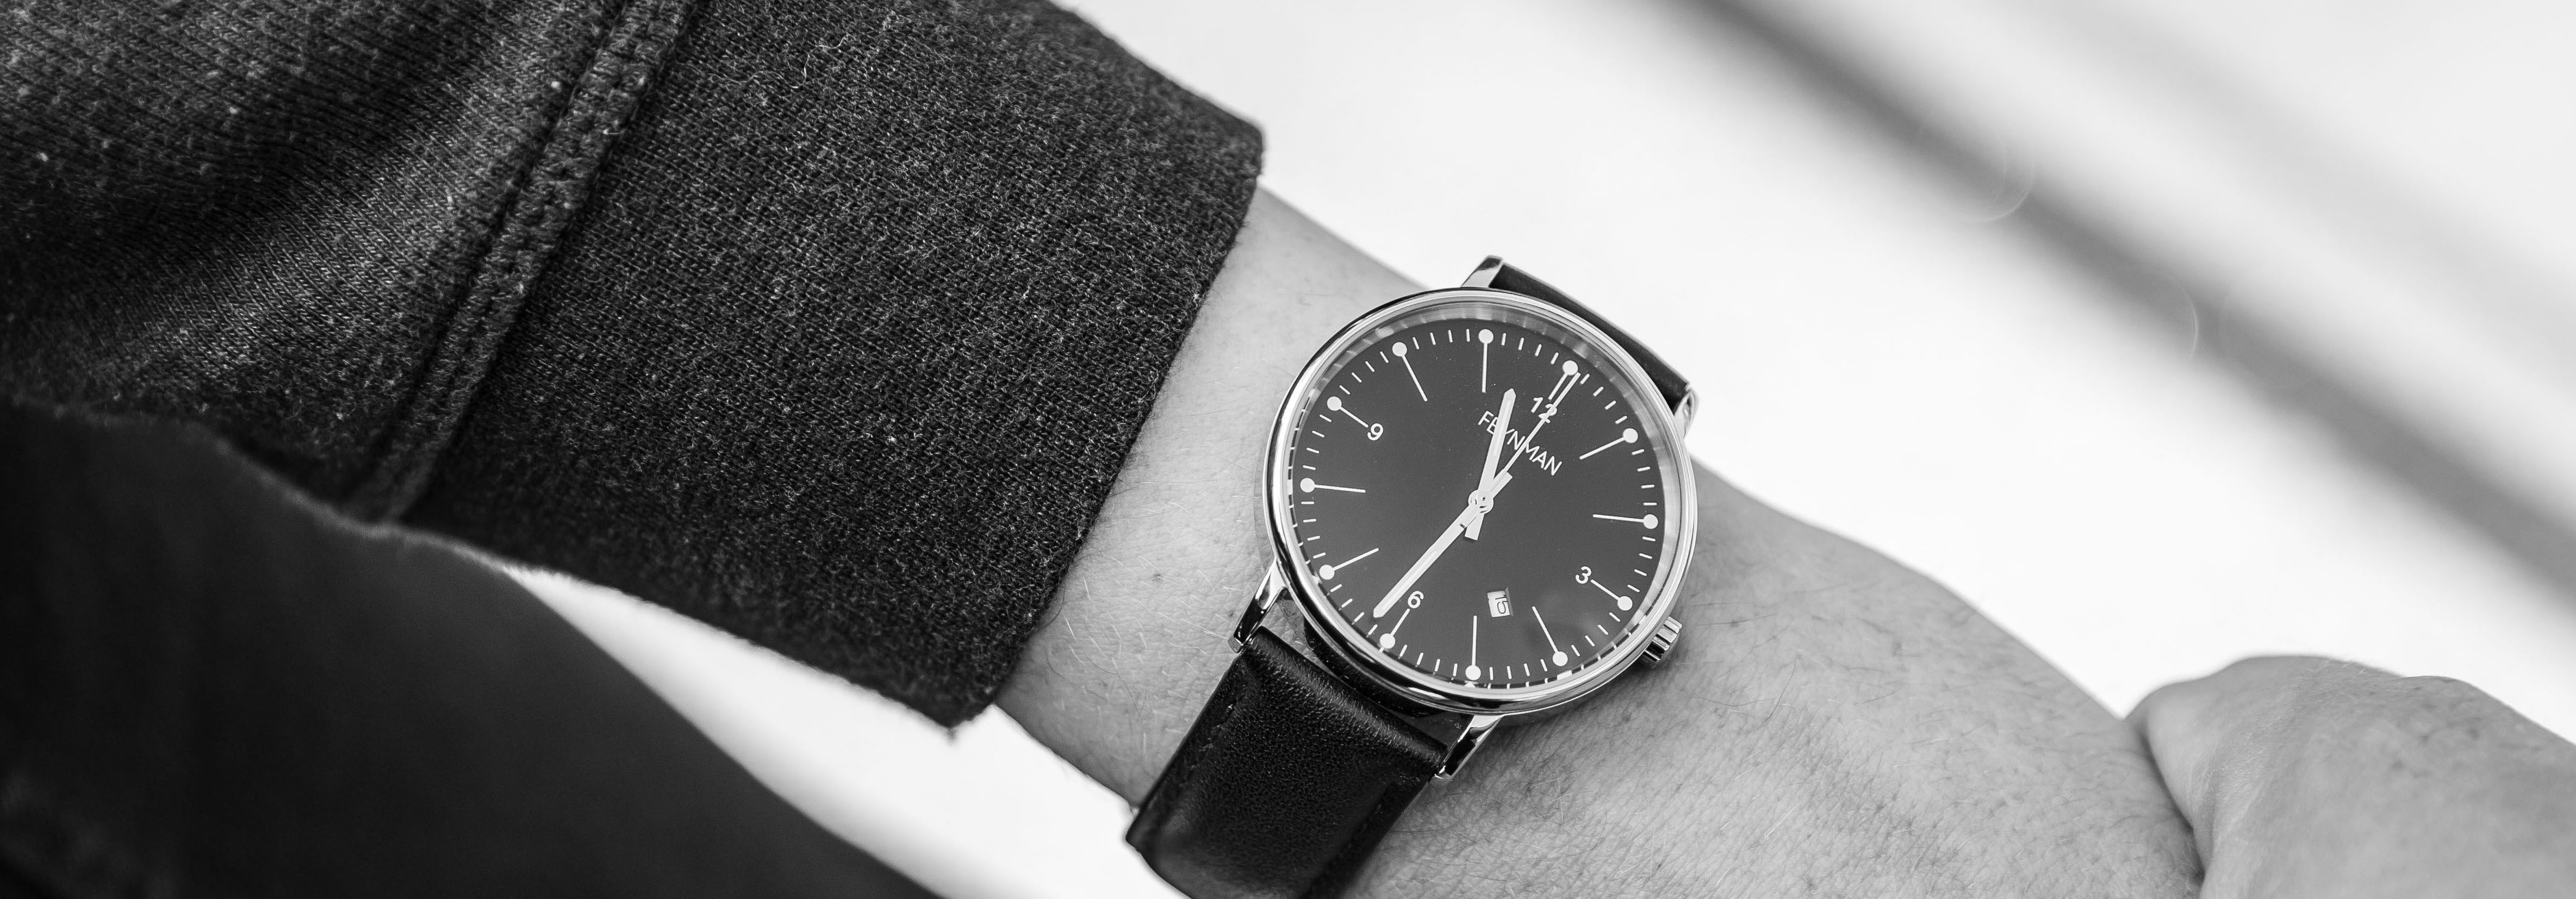 Photo of a hand wearing a Feynman CWII watch